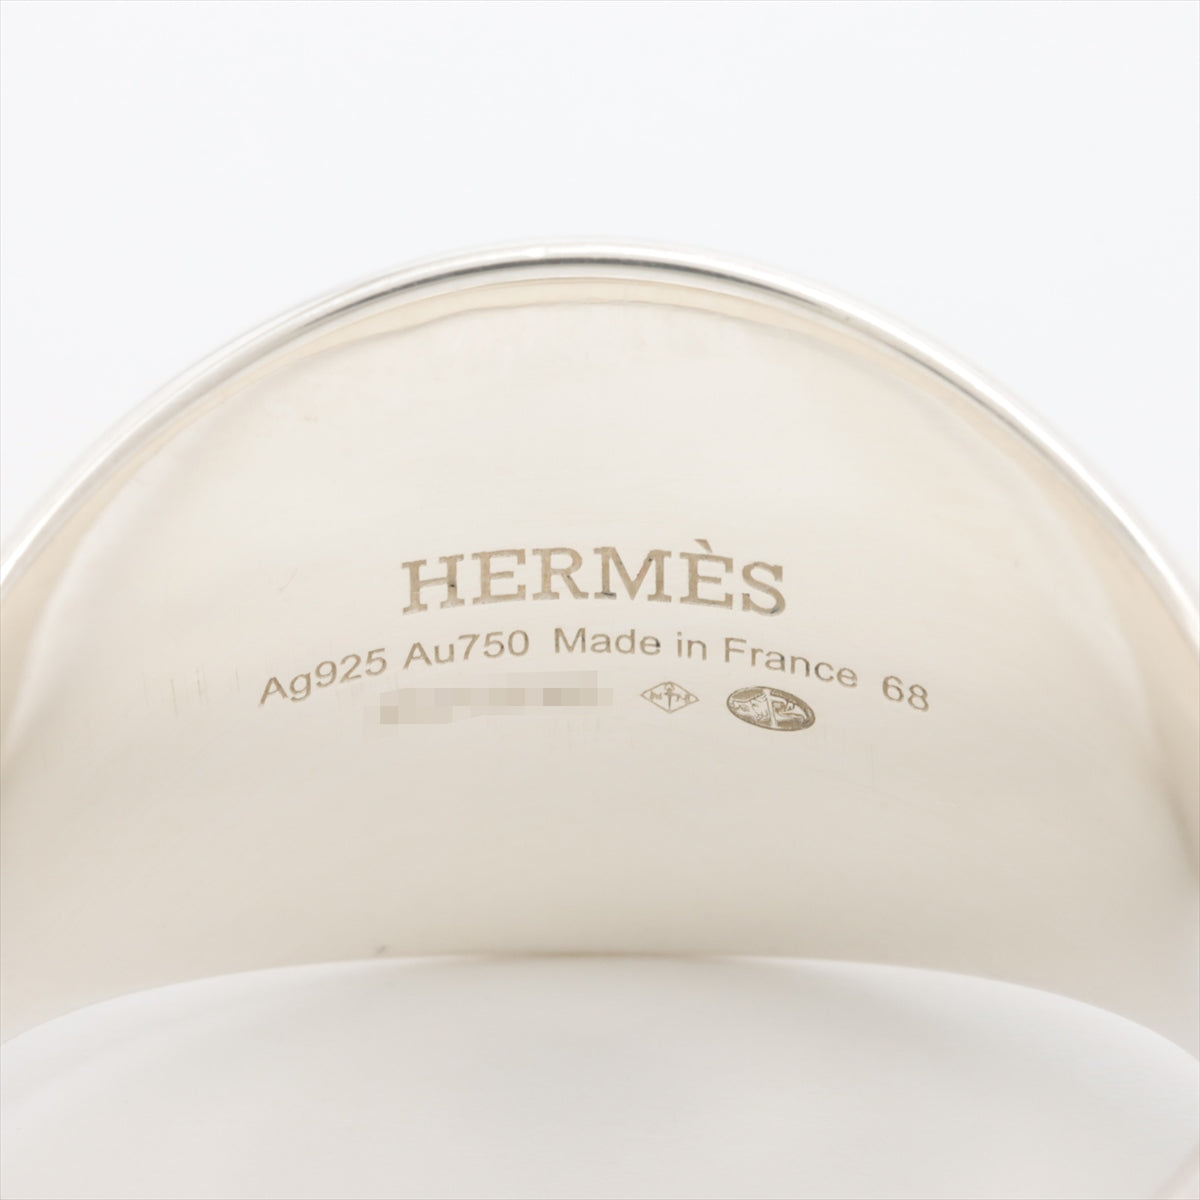 Hermès Ex-Libris Chevalier PM rings 68 925×750 12.7g Gold × Silver